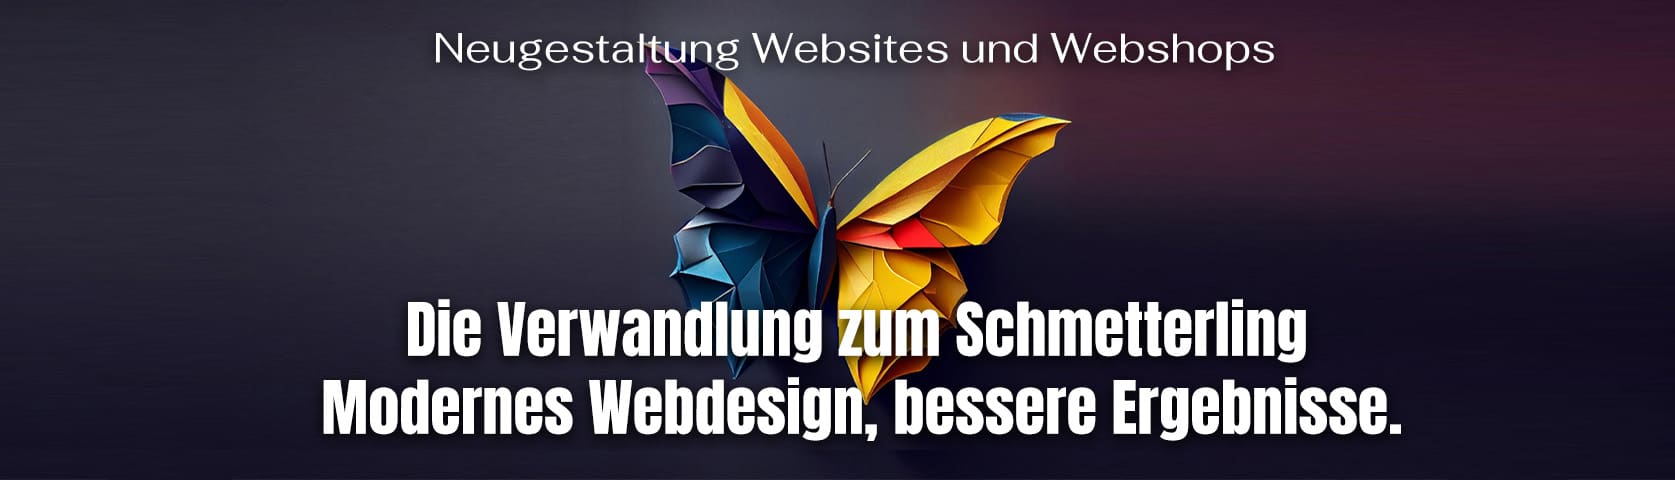 Neugestaltung Websites und Webshops